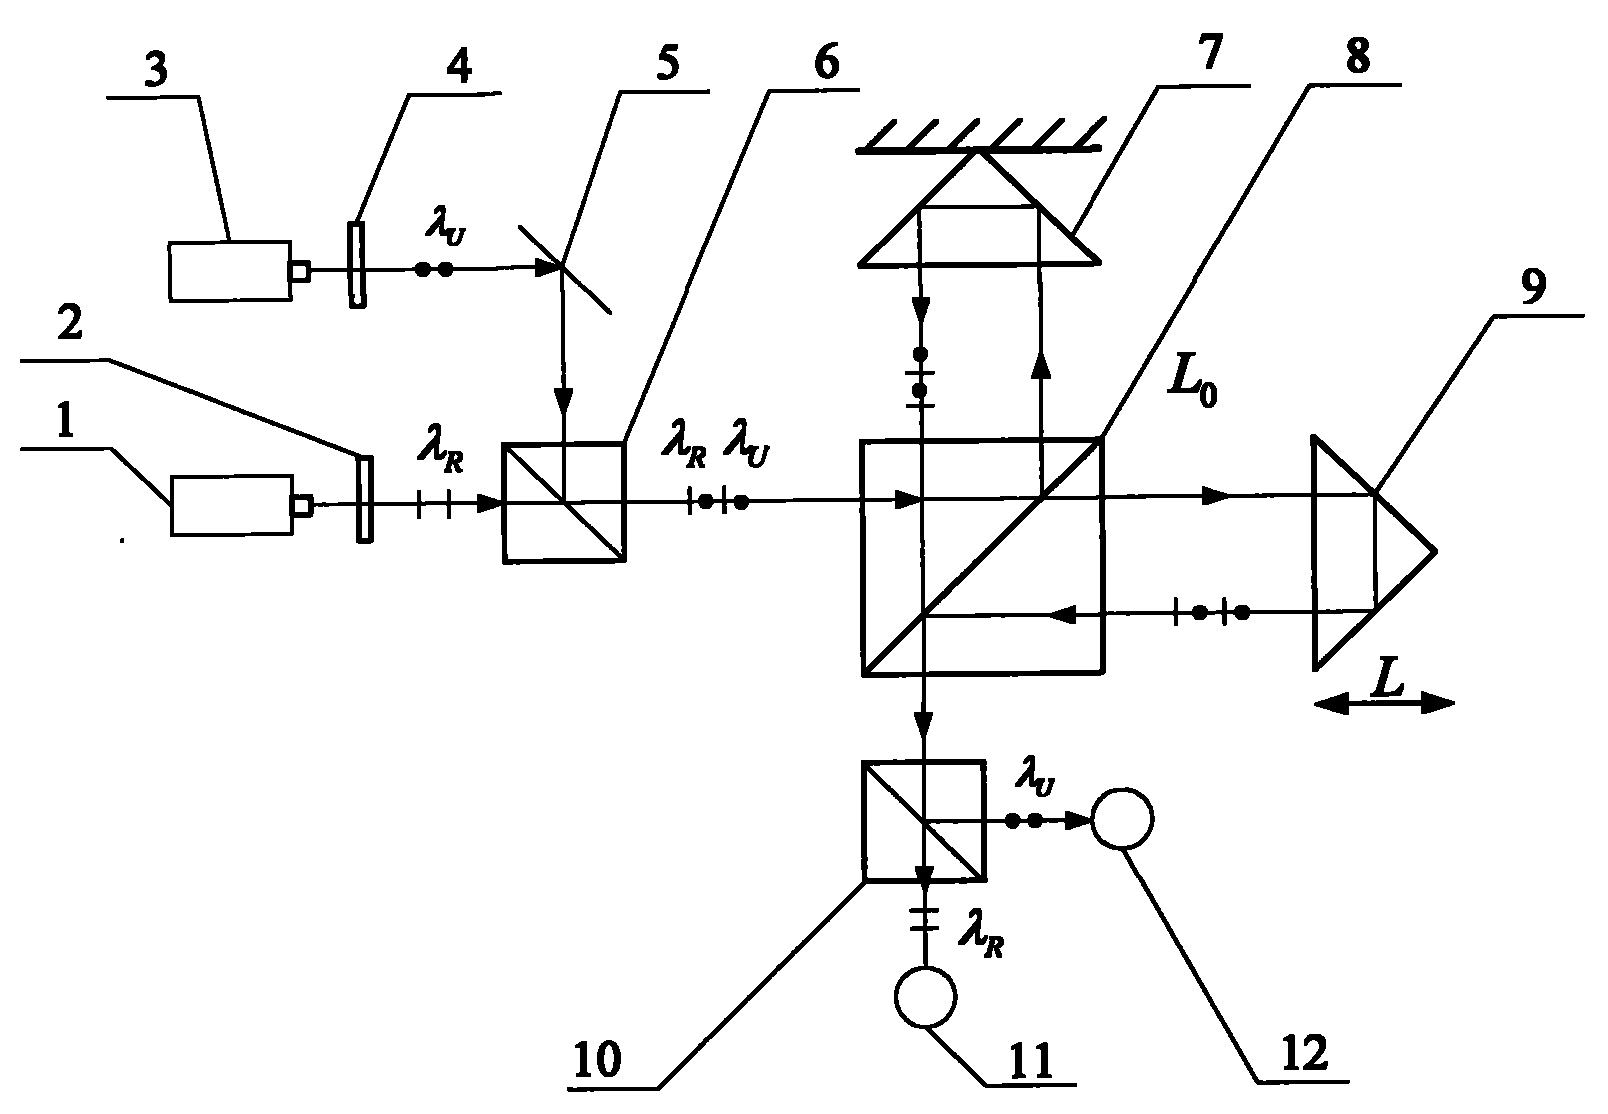 Method and device for measuring laser wavelength based on bound wavelength